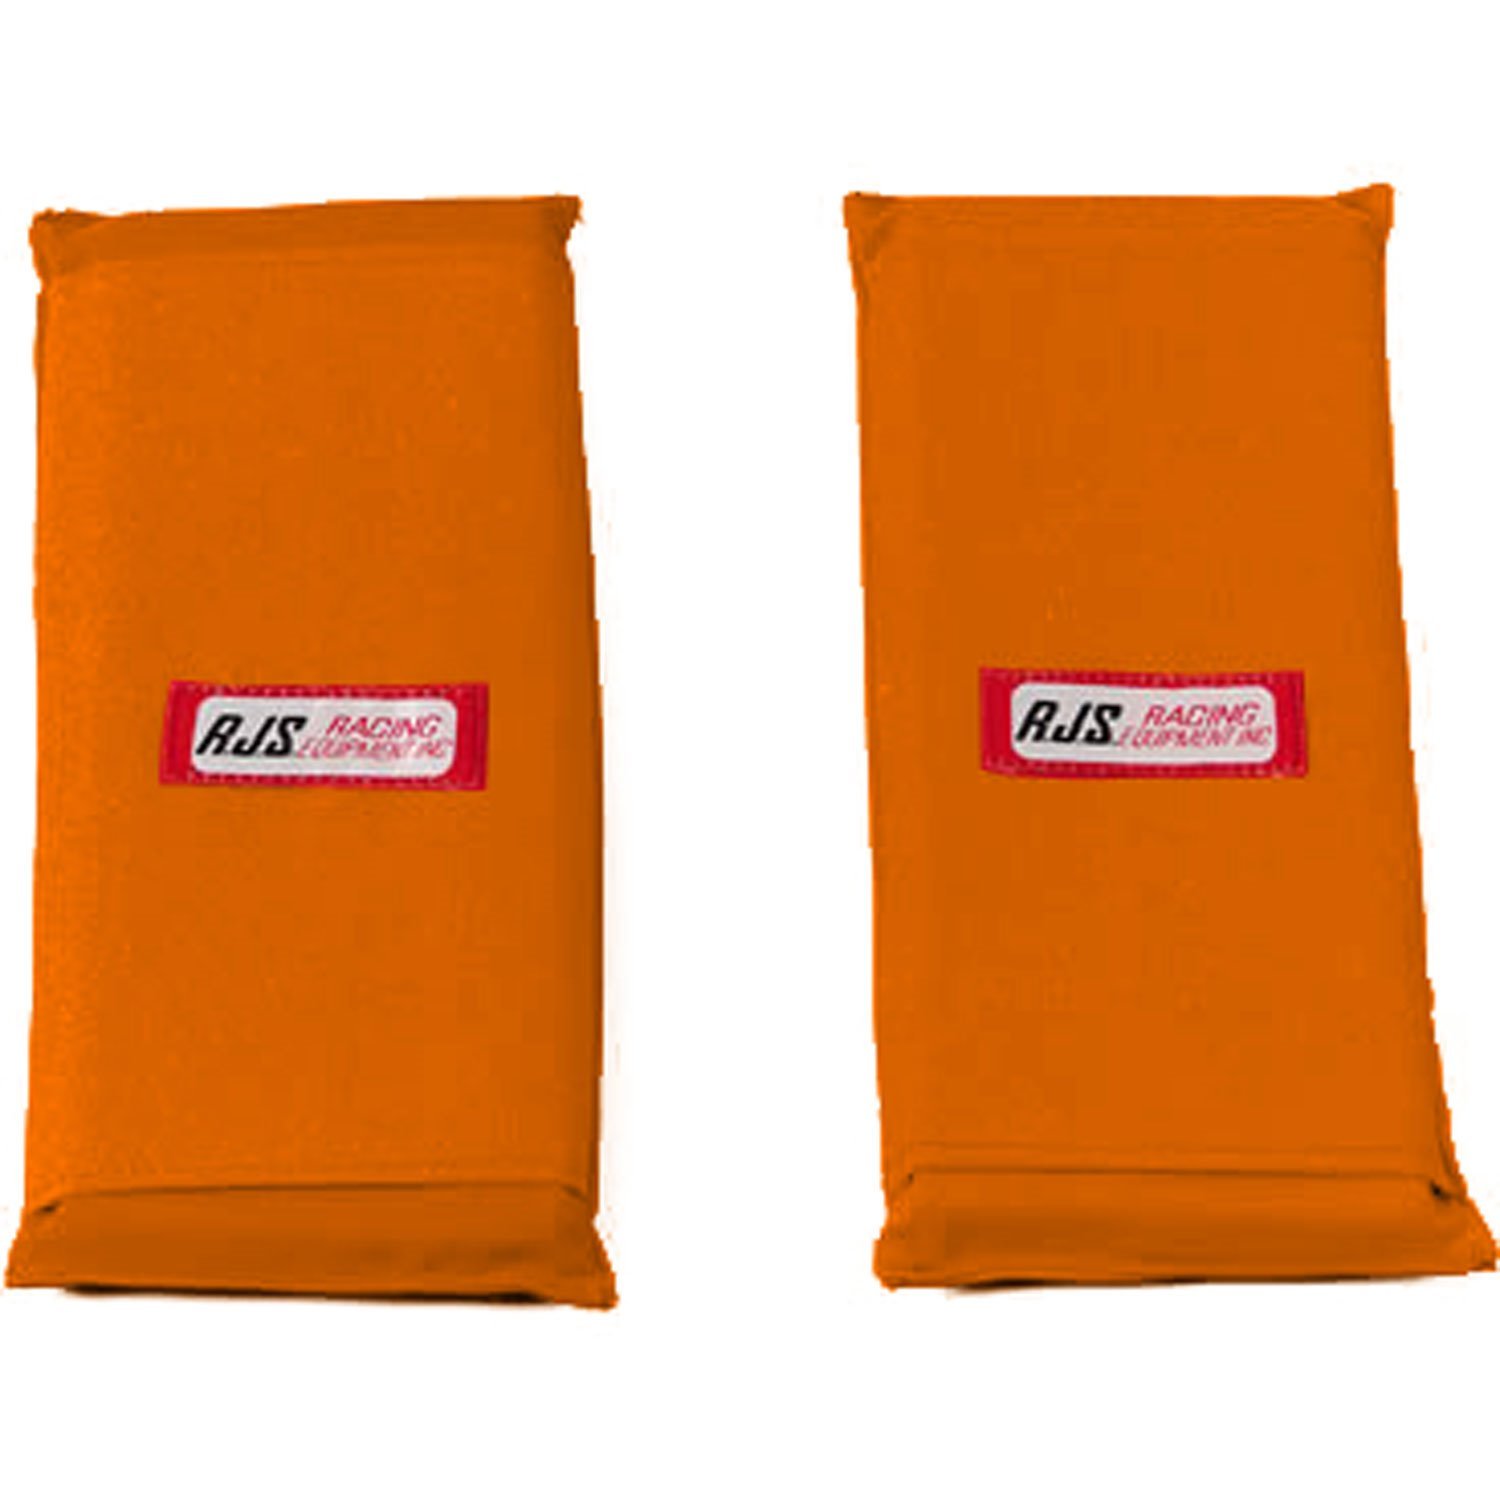 RJS Orange Safety Harness Pads